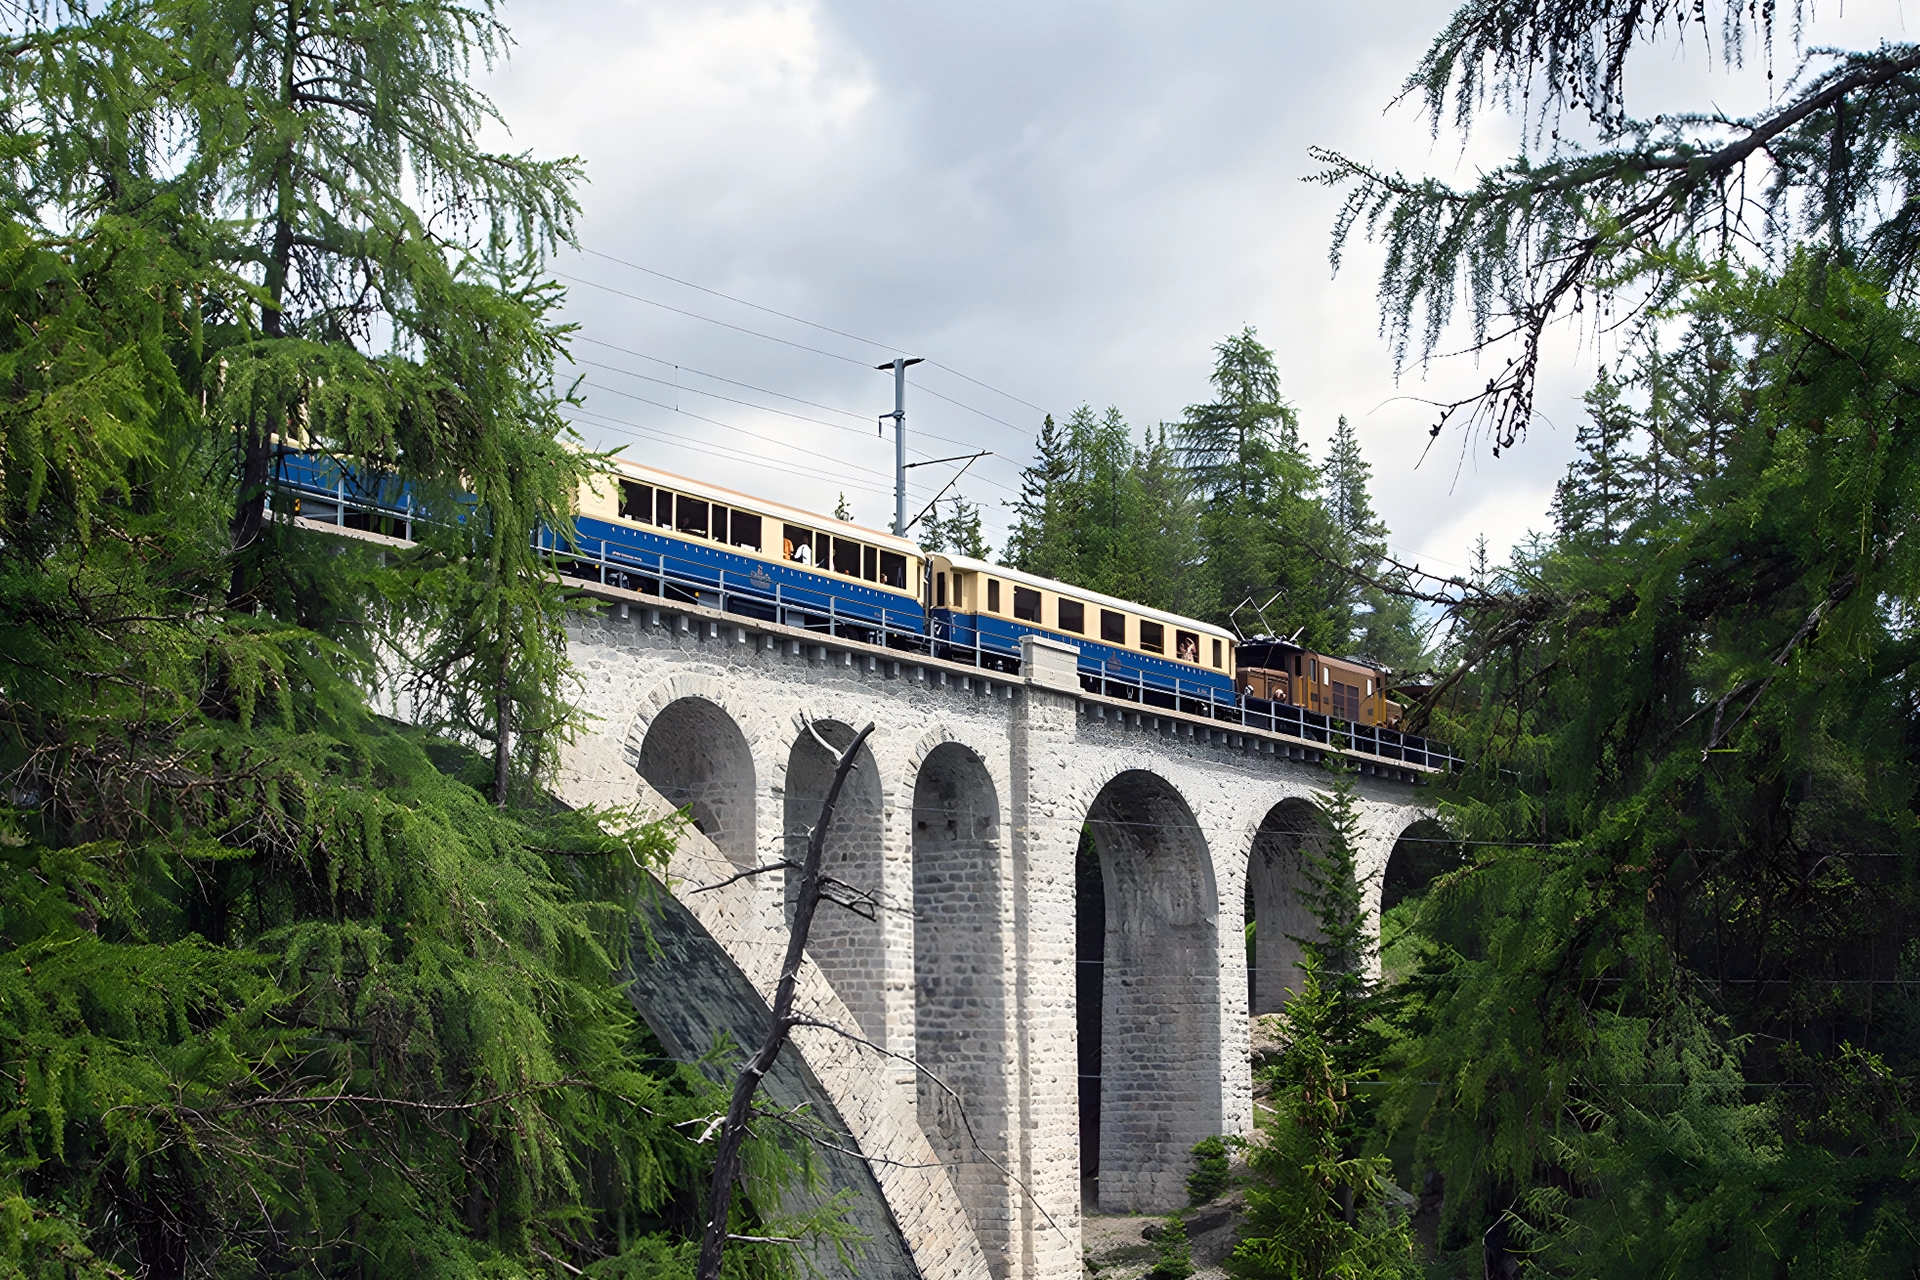 Exclusive package: "Glacier Pullman Express" from St. Moritz to Zermatt